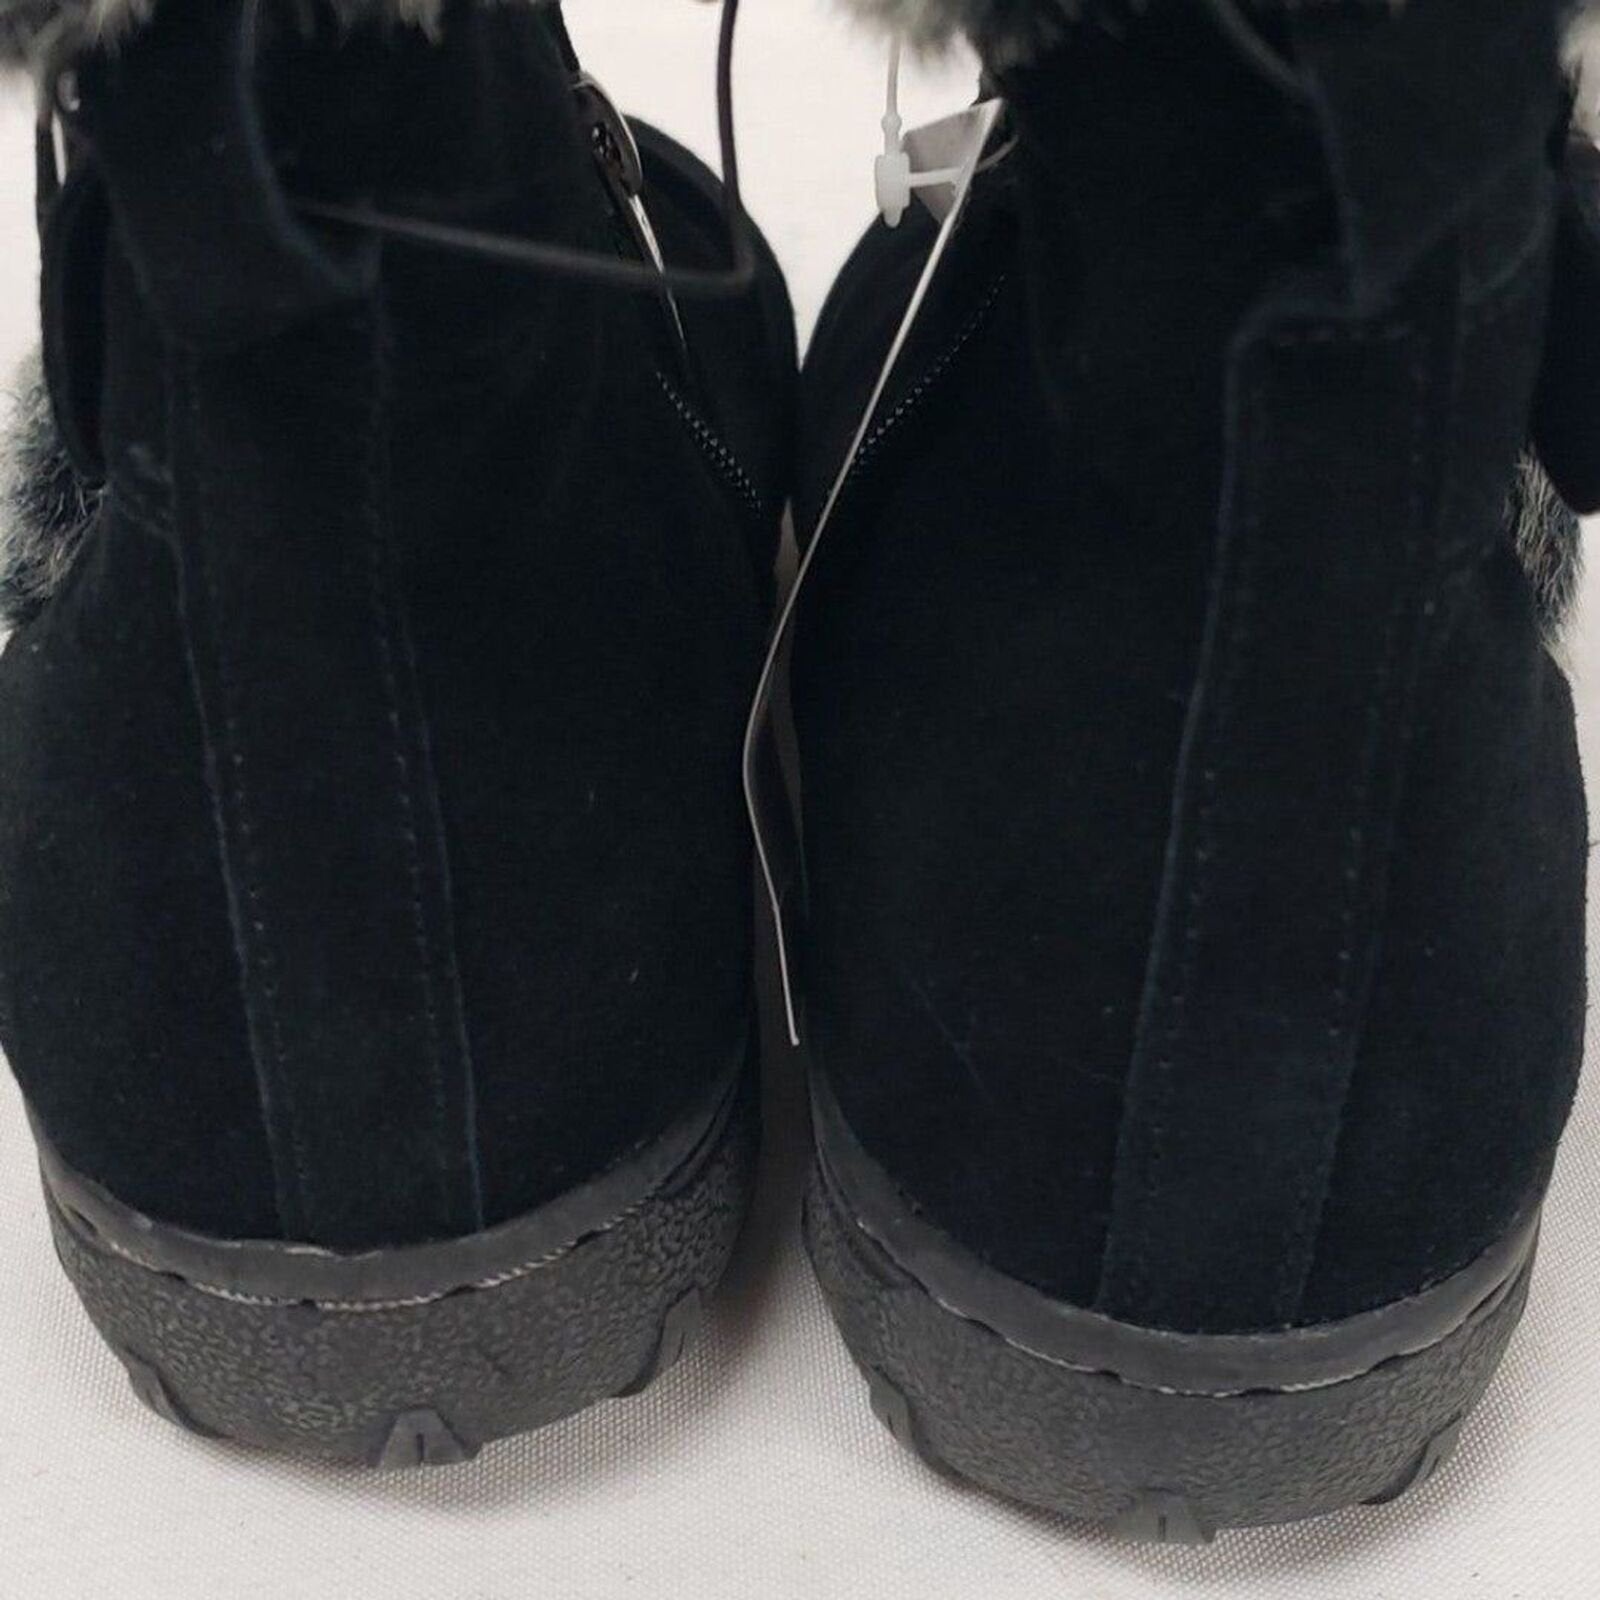 KHOMBU Lindsey Boots Suede Leather Black Womens Size 7